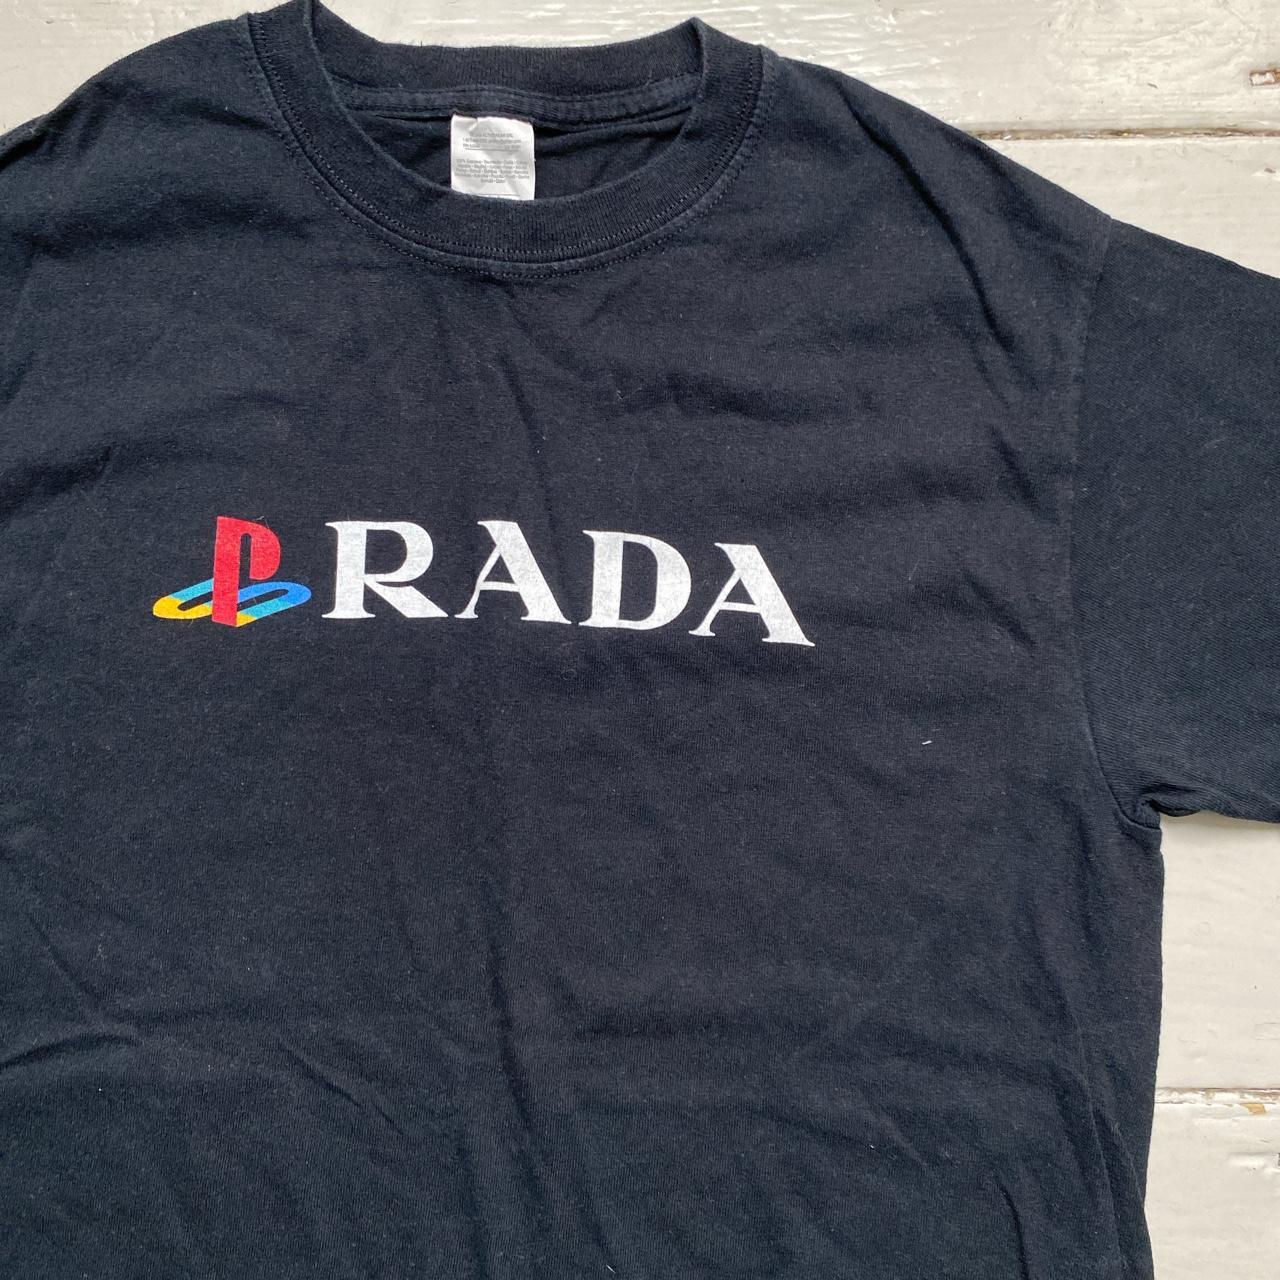 Prada Playstation T Shirt Black and White